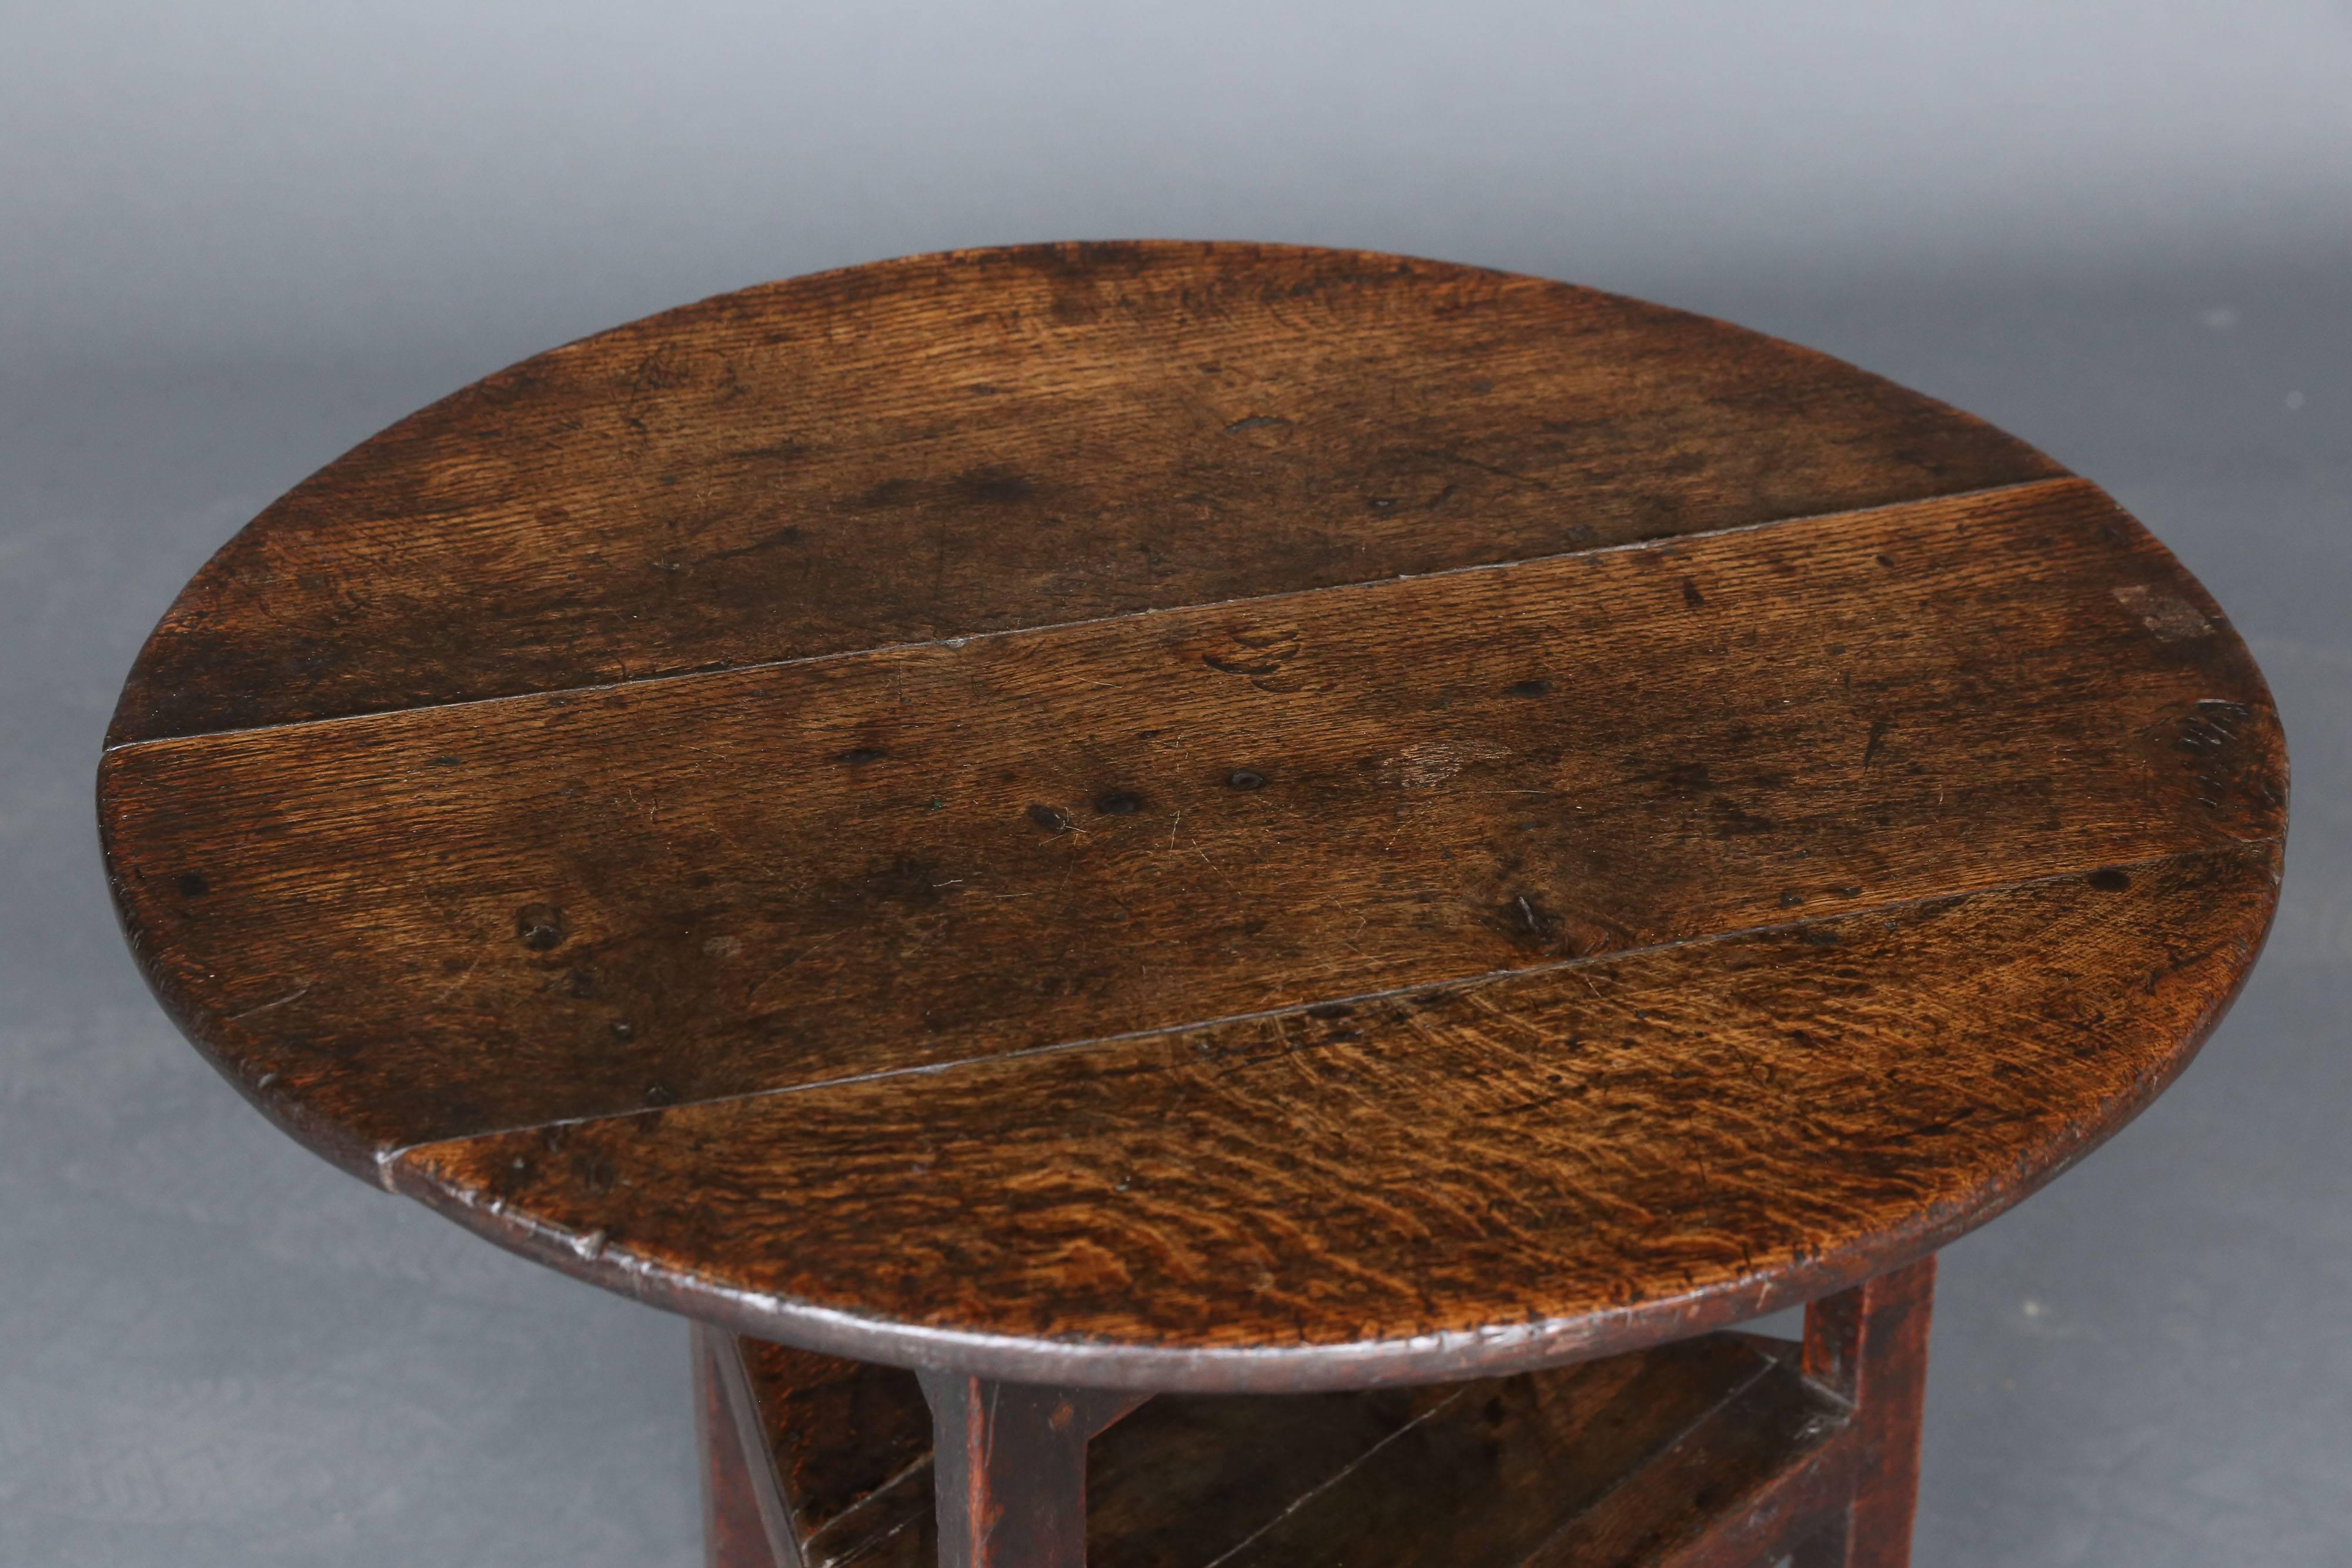 18th century oak cricket table with shelf. Beautiful patina.